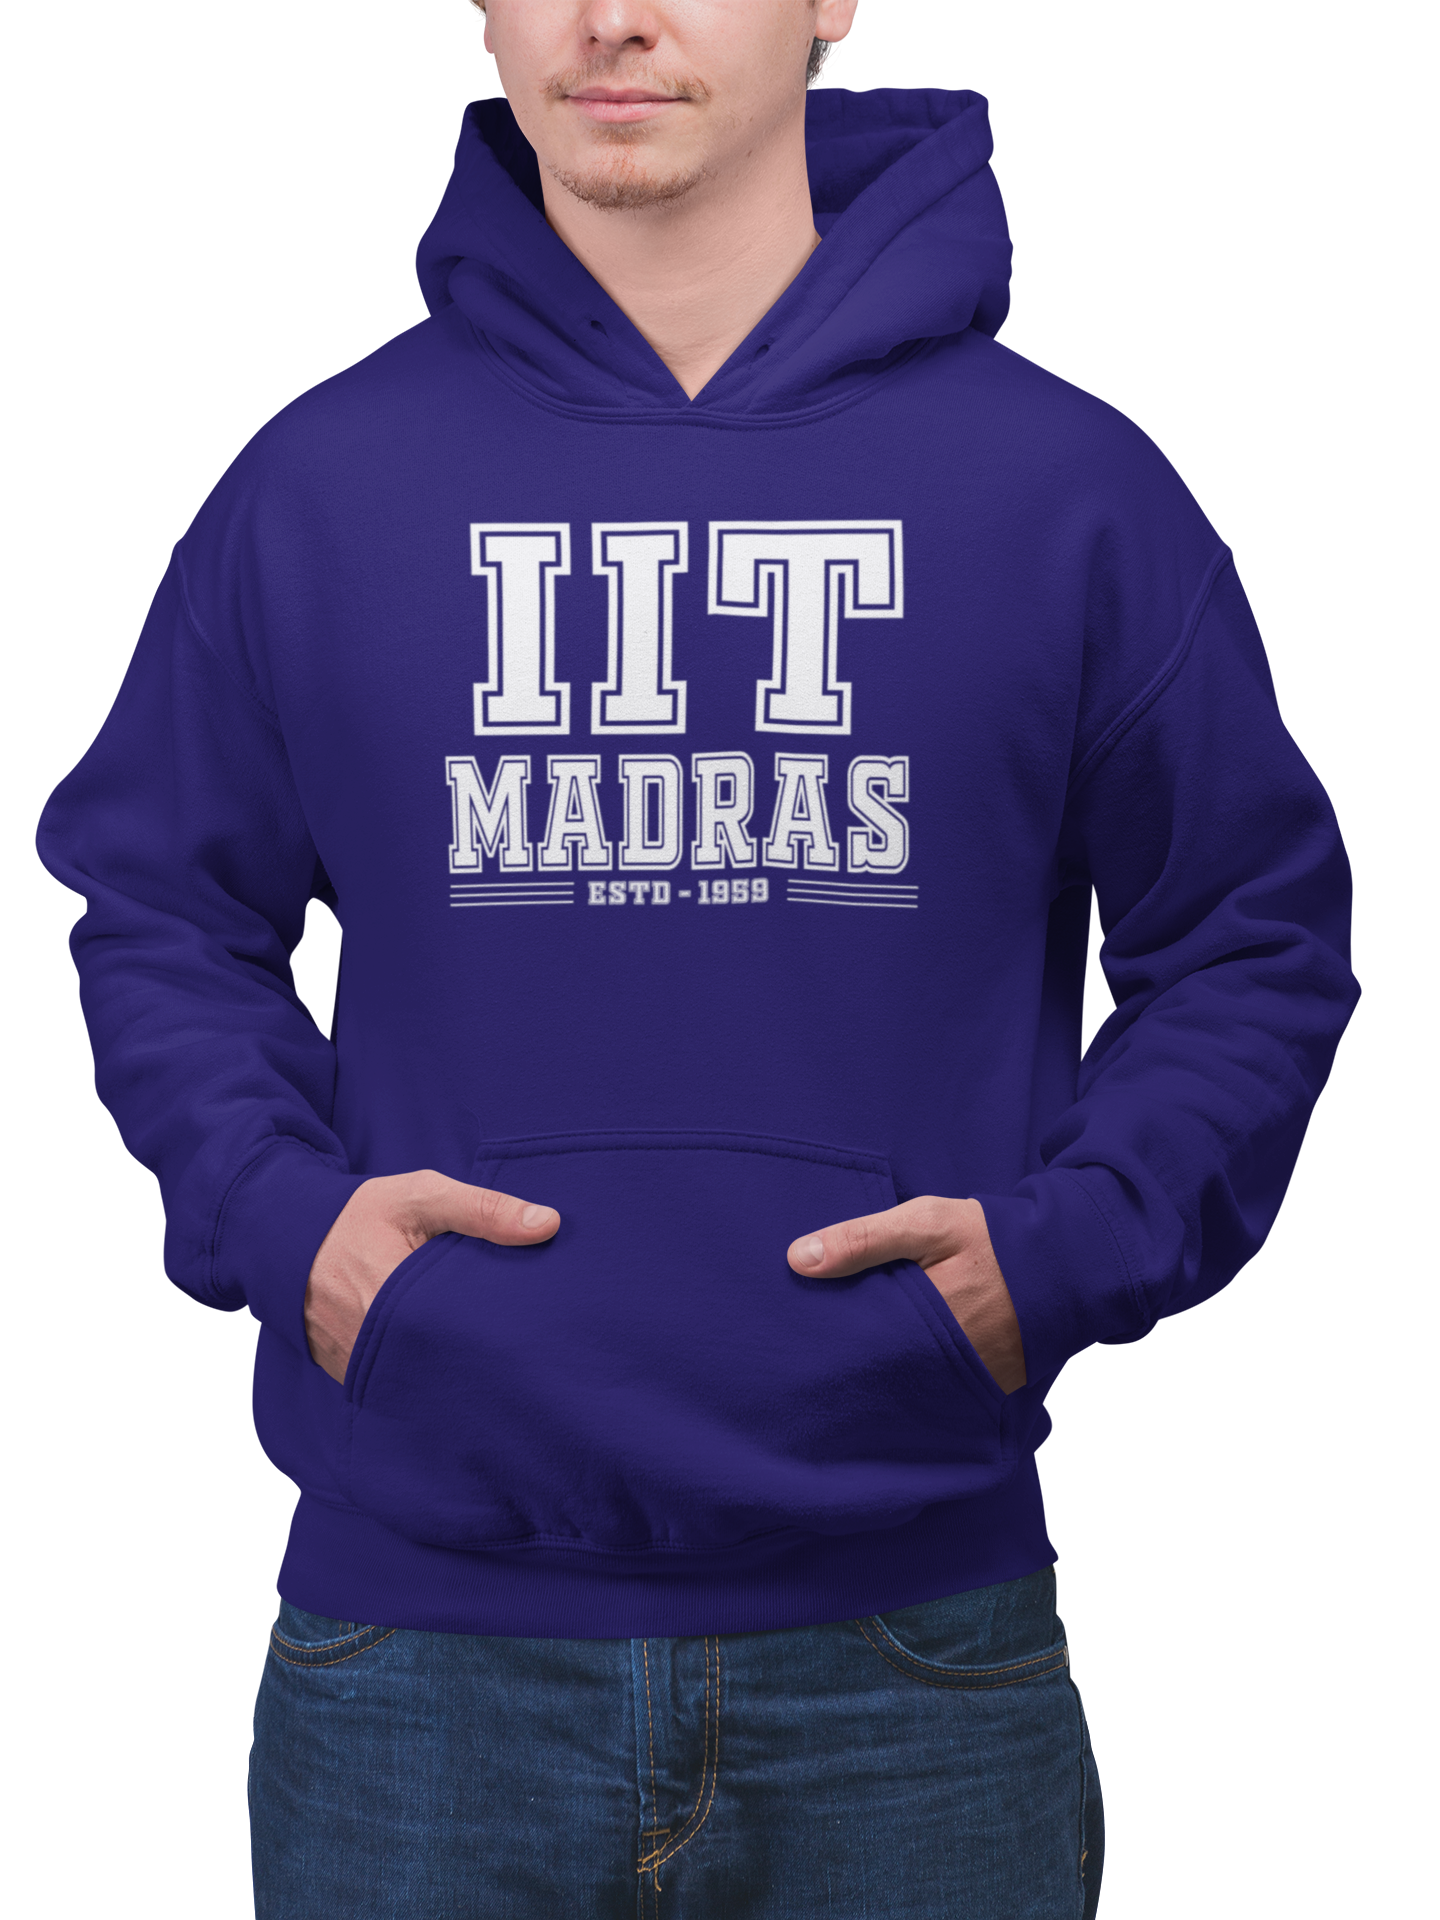 IIT Madras-teeshood.com